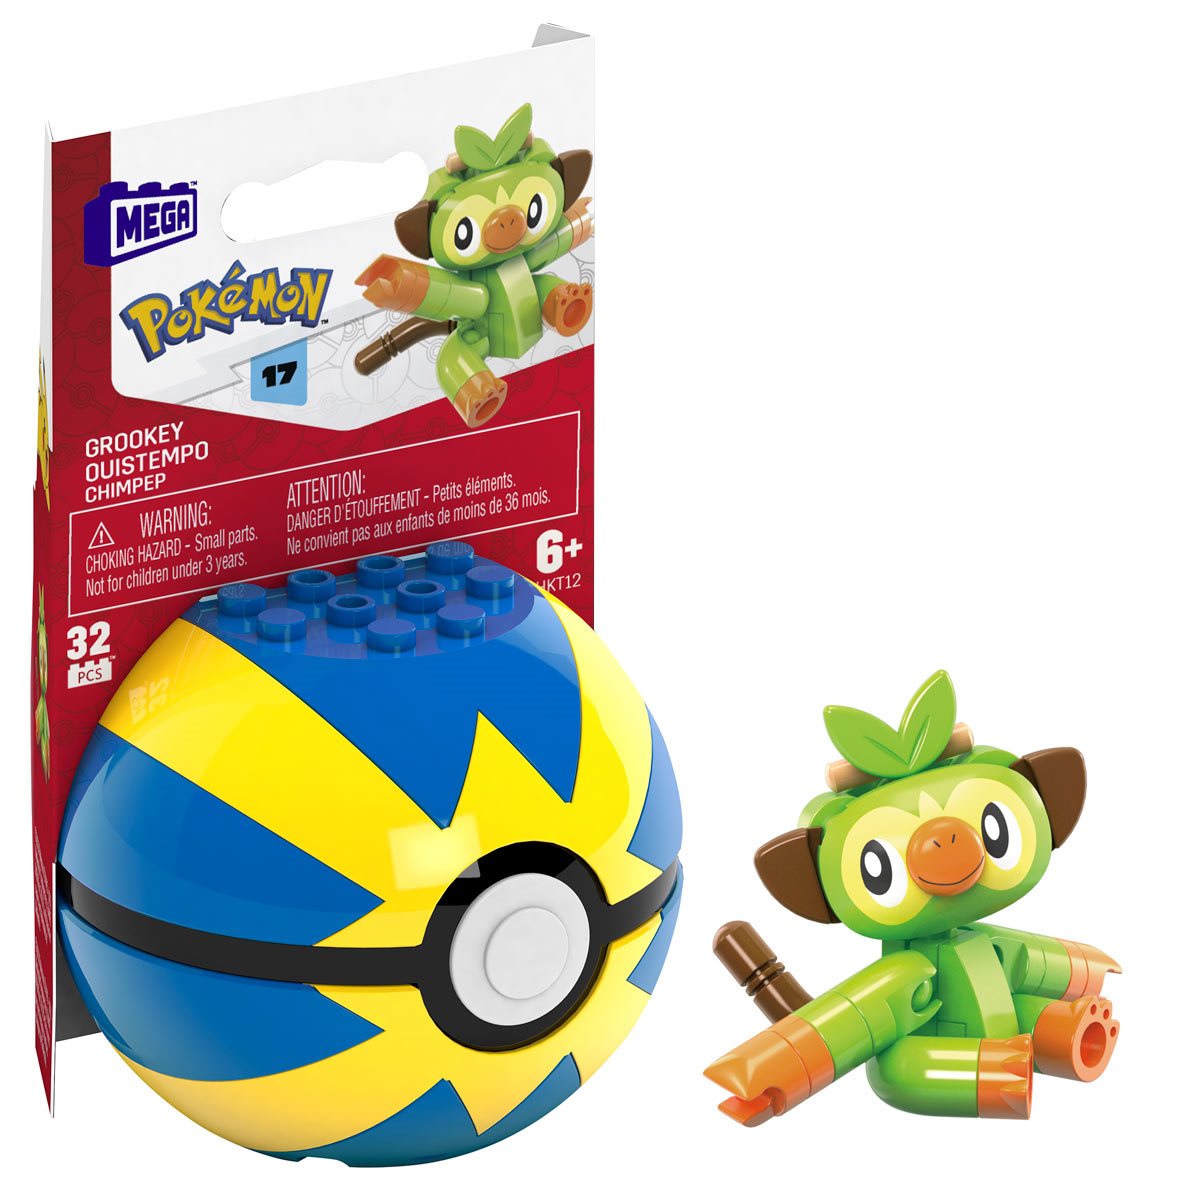 MEGA Pokemon Sobble Action Figure Building Set with Poke Ball (29 pc)